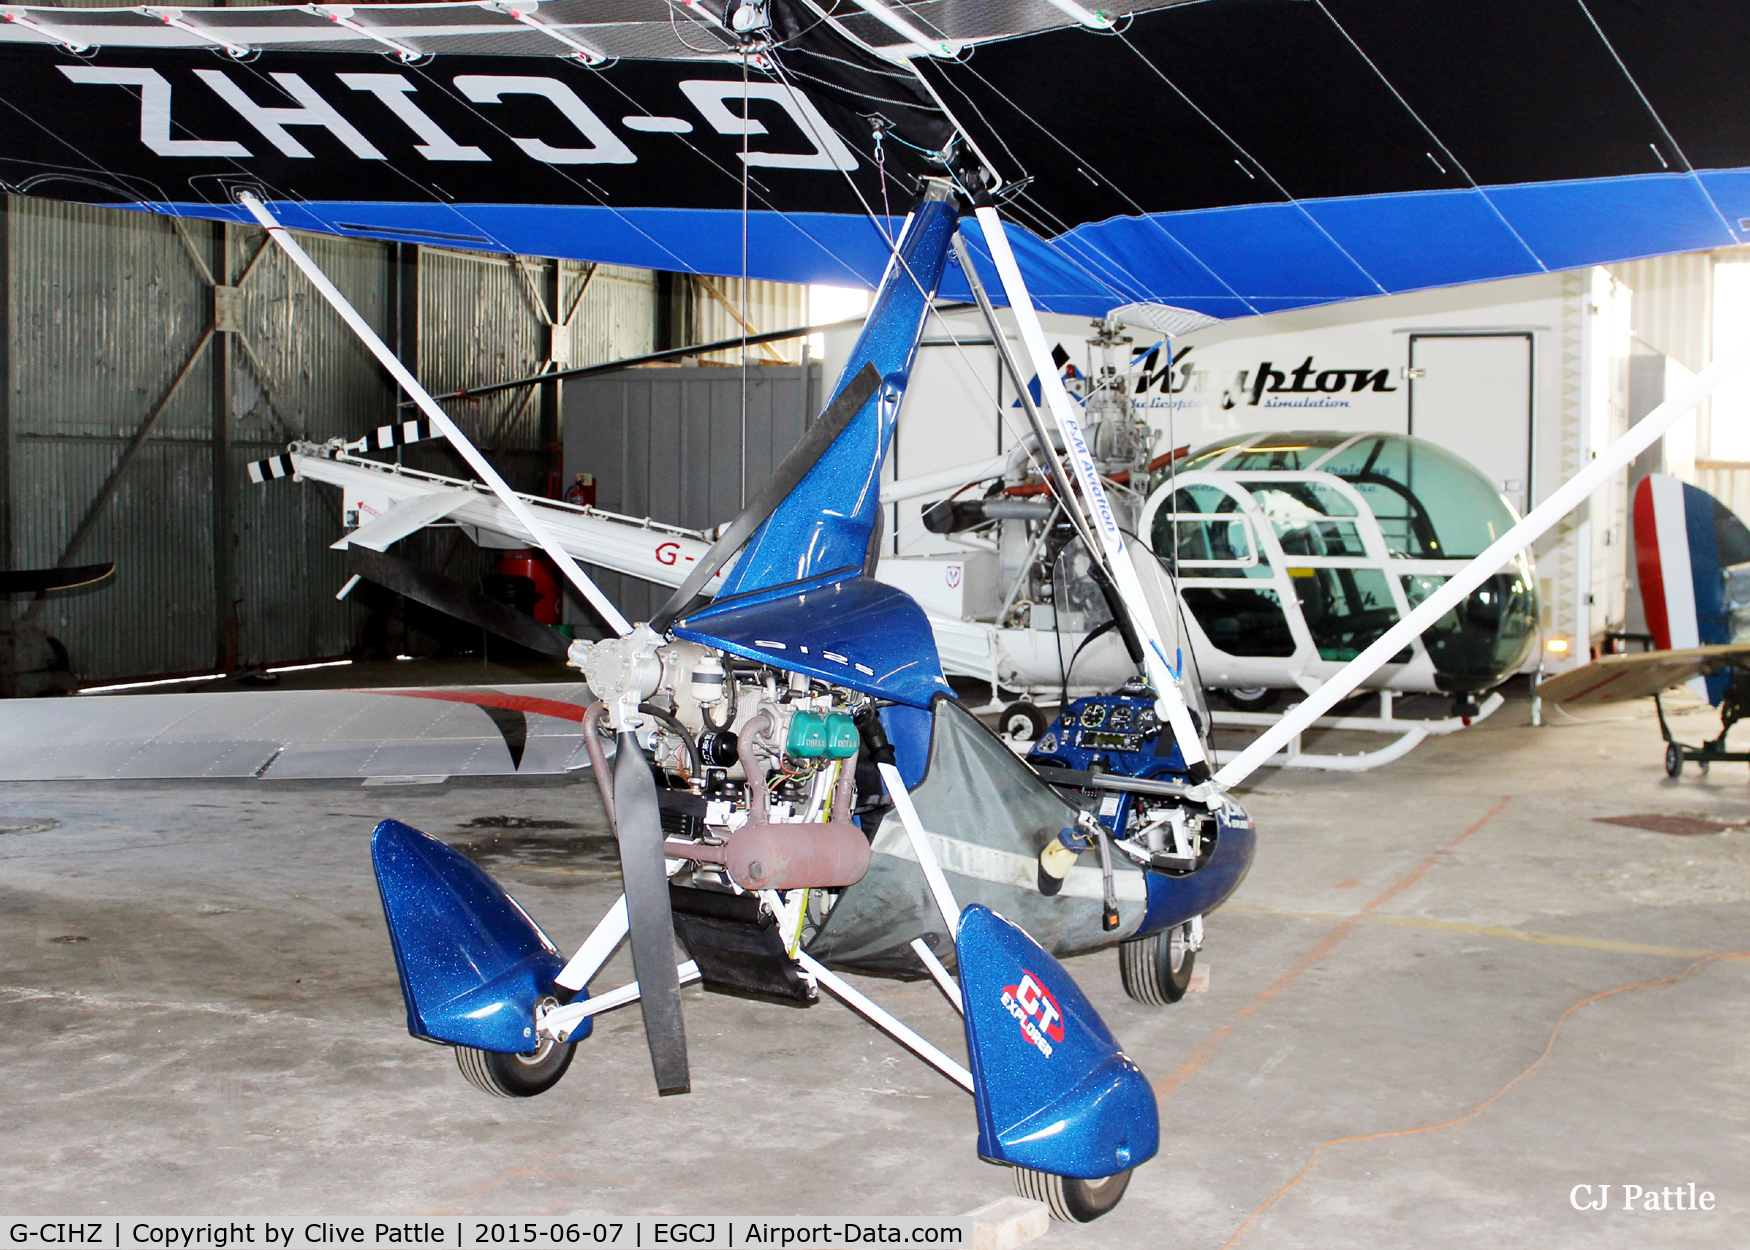 G-CIHZ, 2014 P&M Aviation Quik GTR C/N 8669, Hangared at Sherburn EGCJ